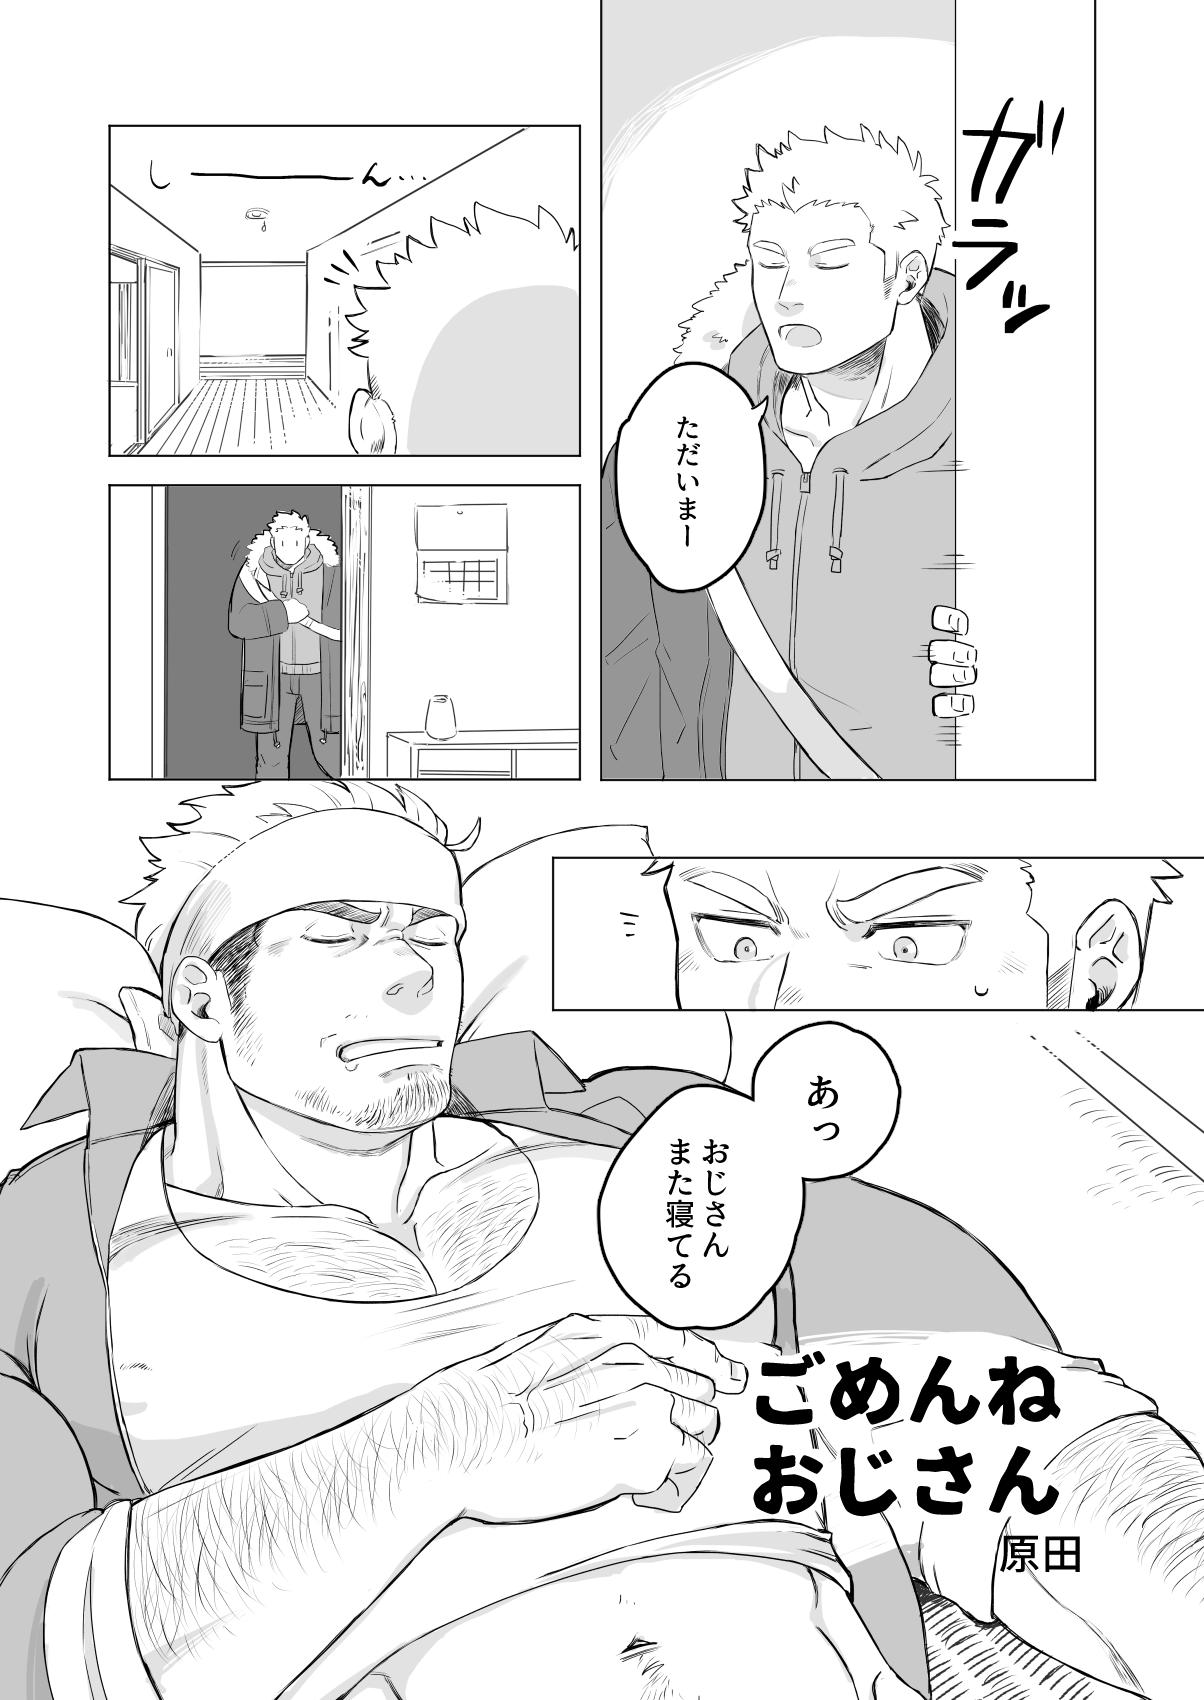 Thief ごめんねおじさん - Sorry uncle - Original Tats - Page 1